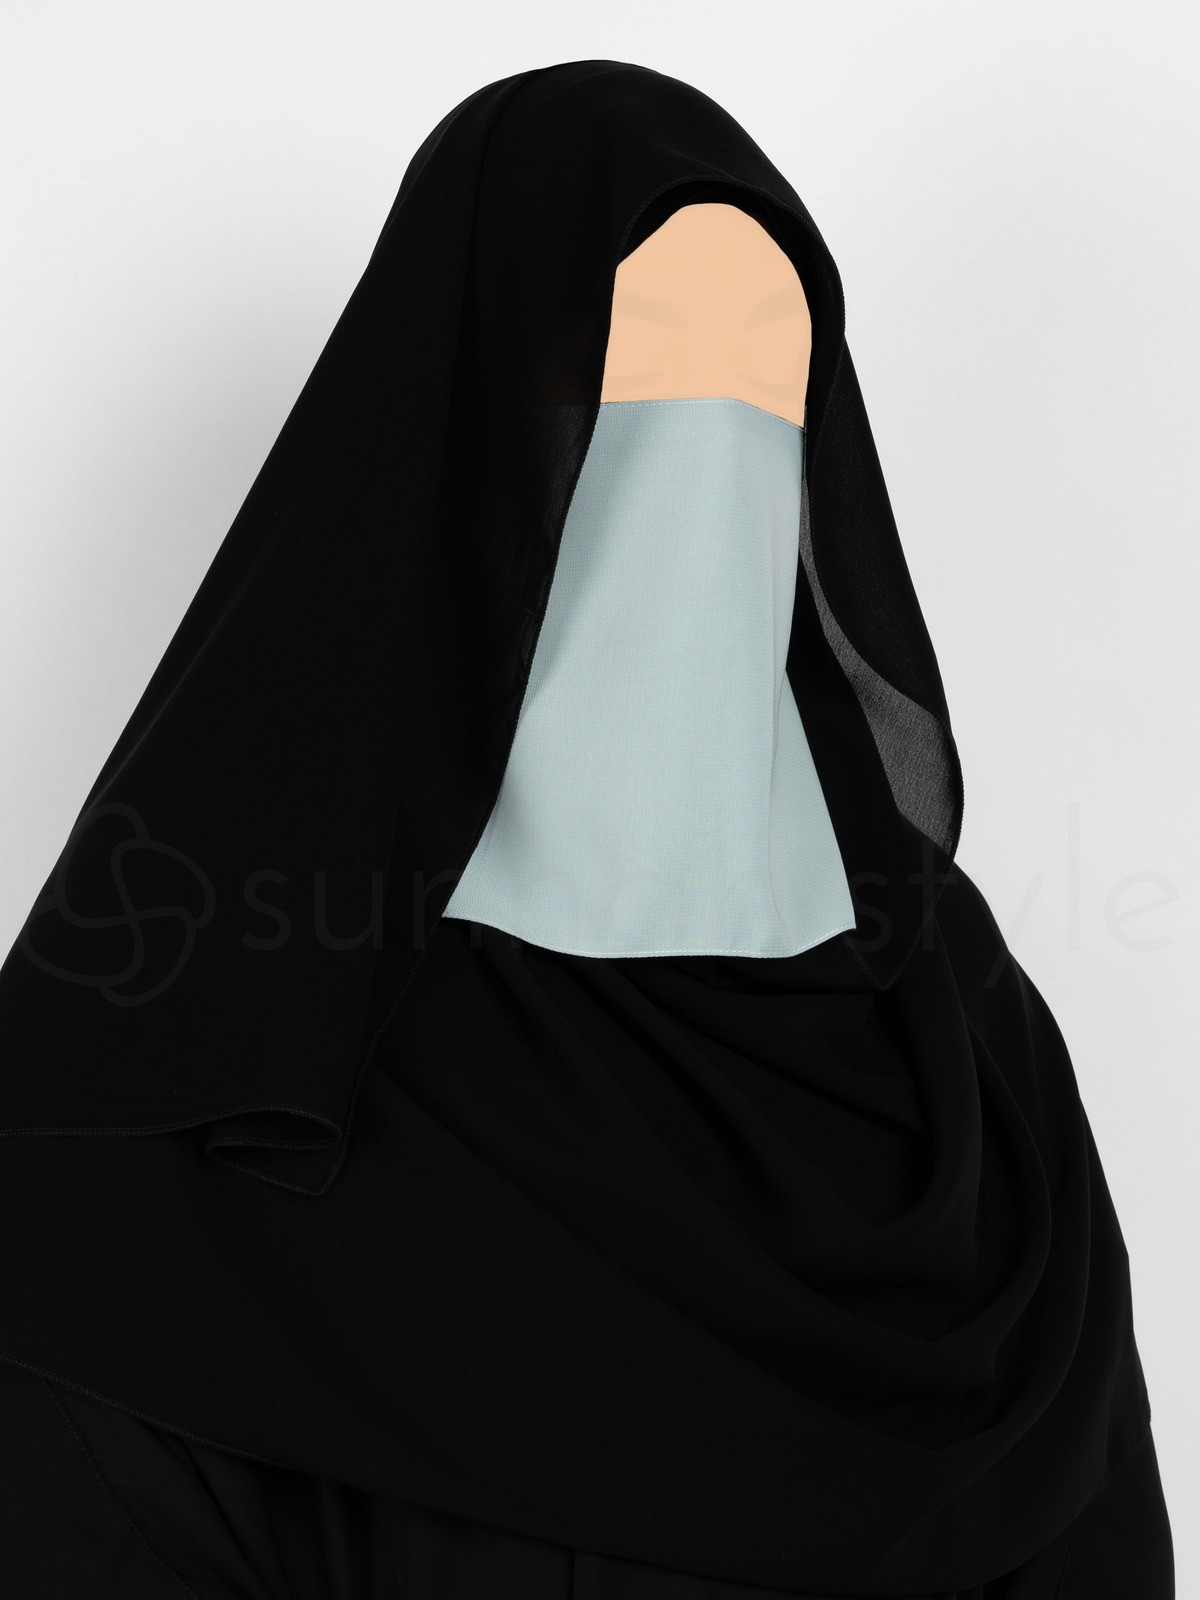 Sunnah Style - Short Elastic Half Niqab (Teal)